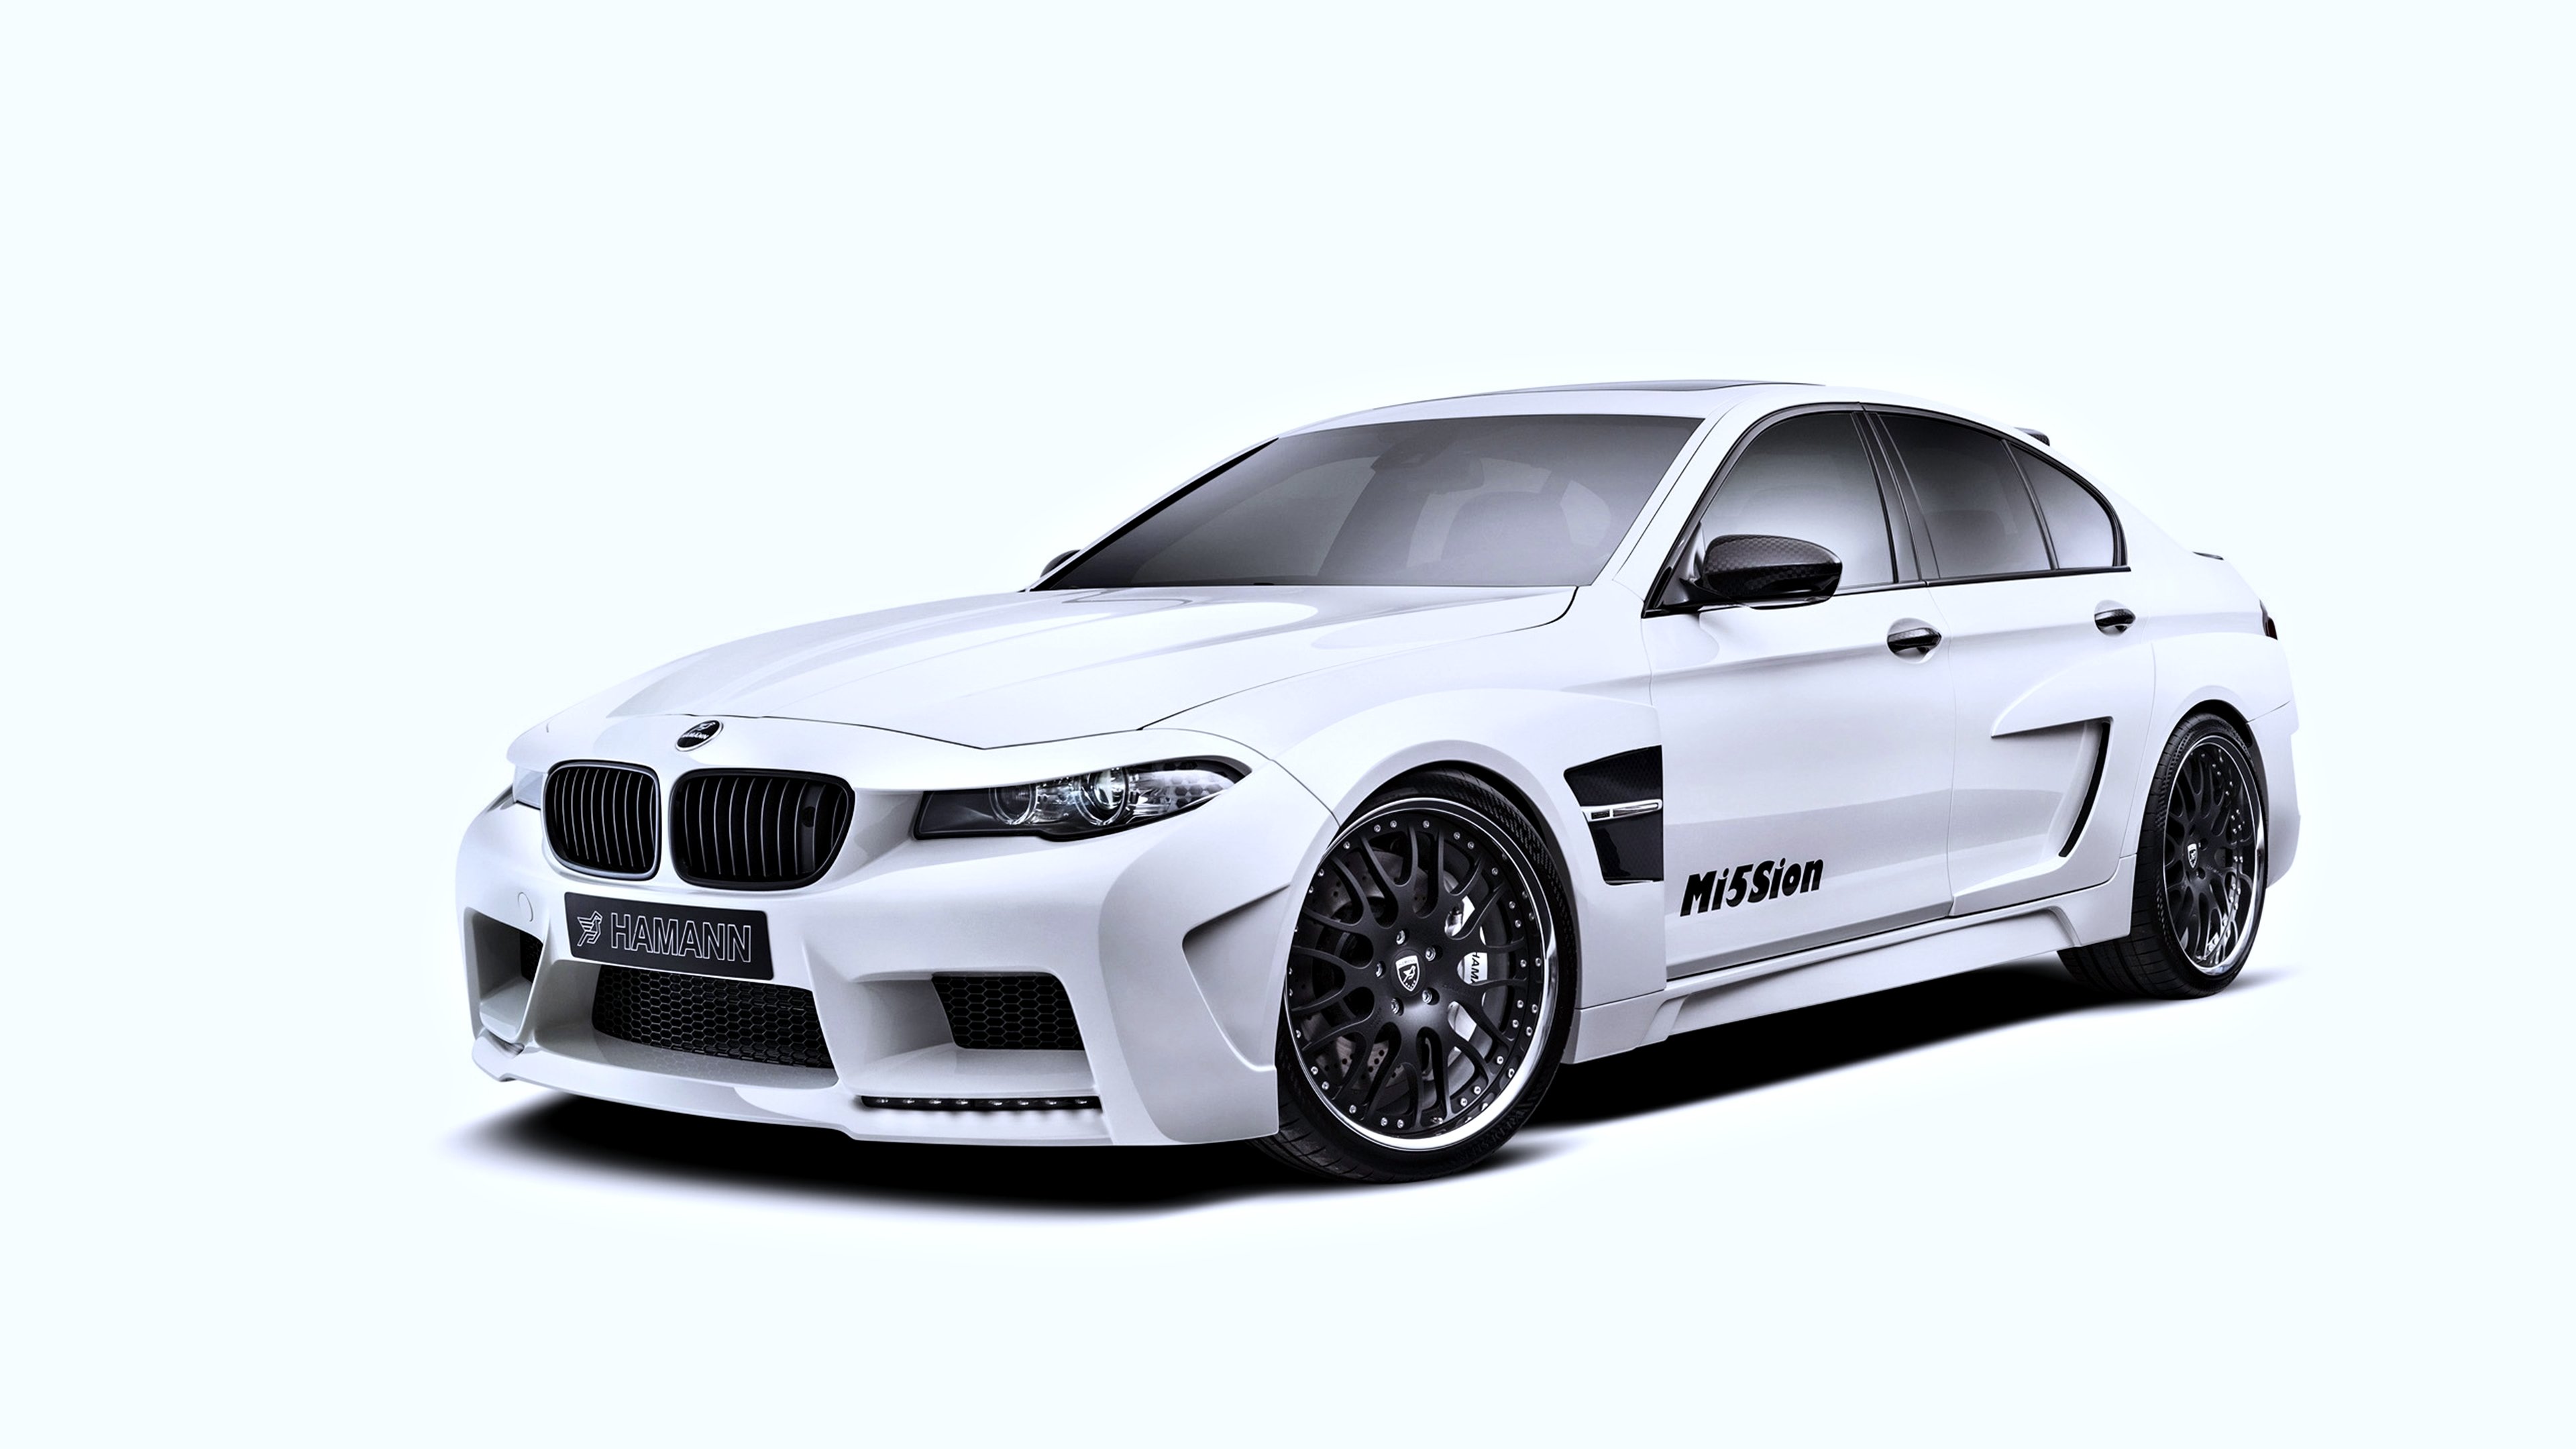 2014, Hamann, Mi5sion, Bmw f10, Cars, Speed, Motors, Race, White, Force Wallpaper